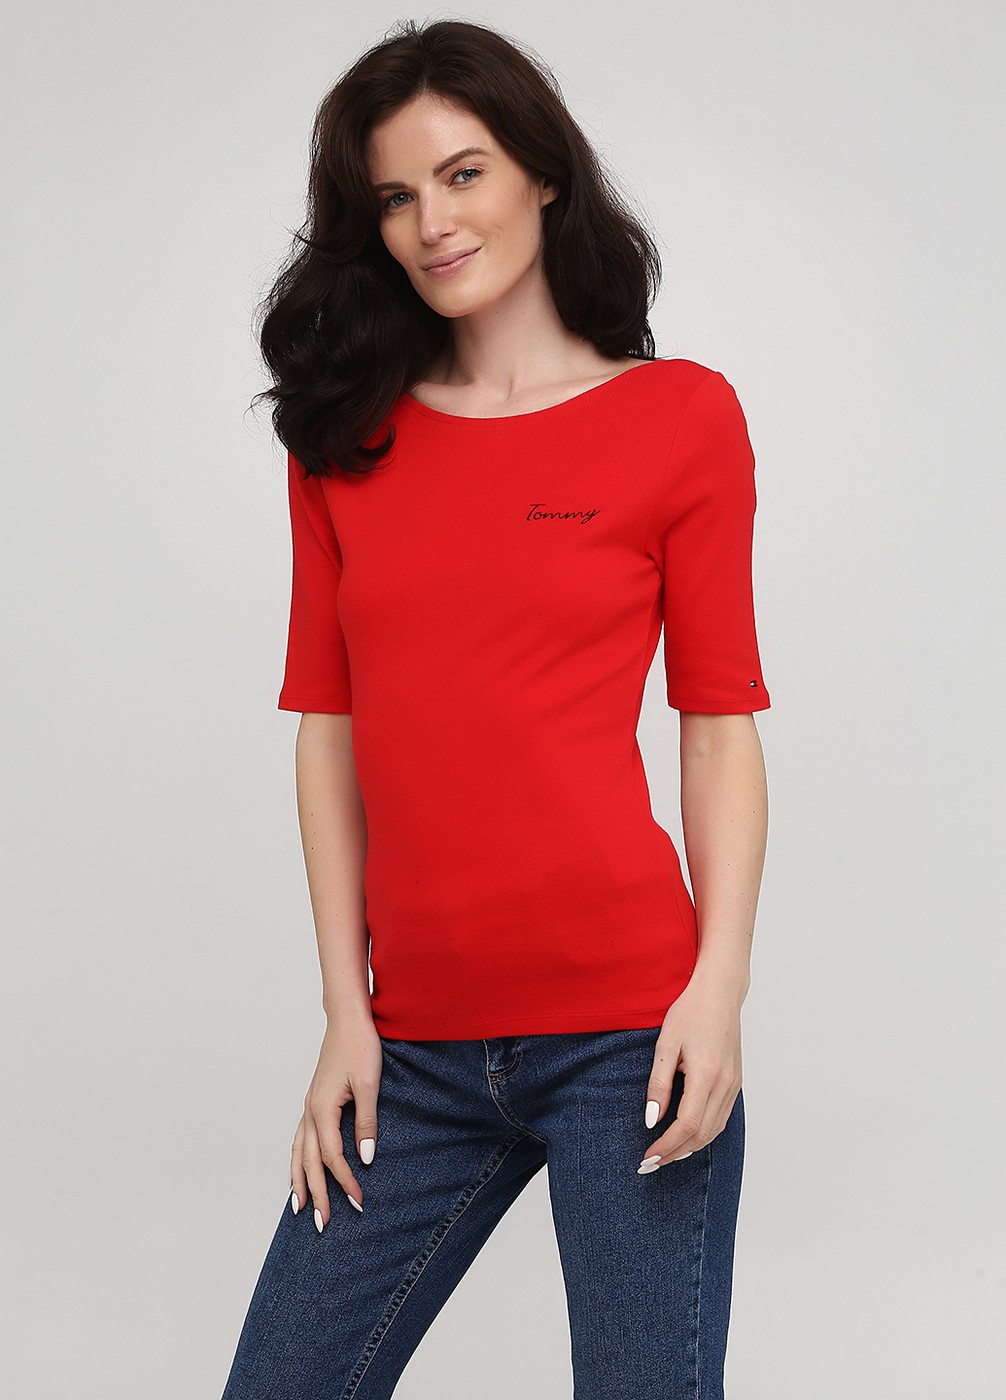 Красная футболка - женская футболка Tommy Hilfiger, S, S